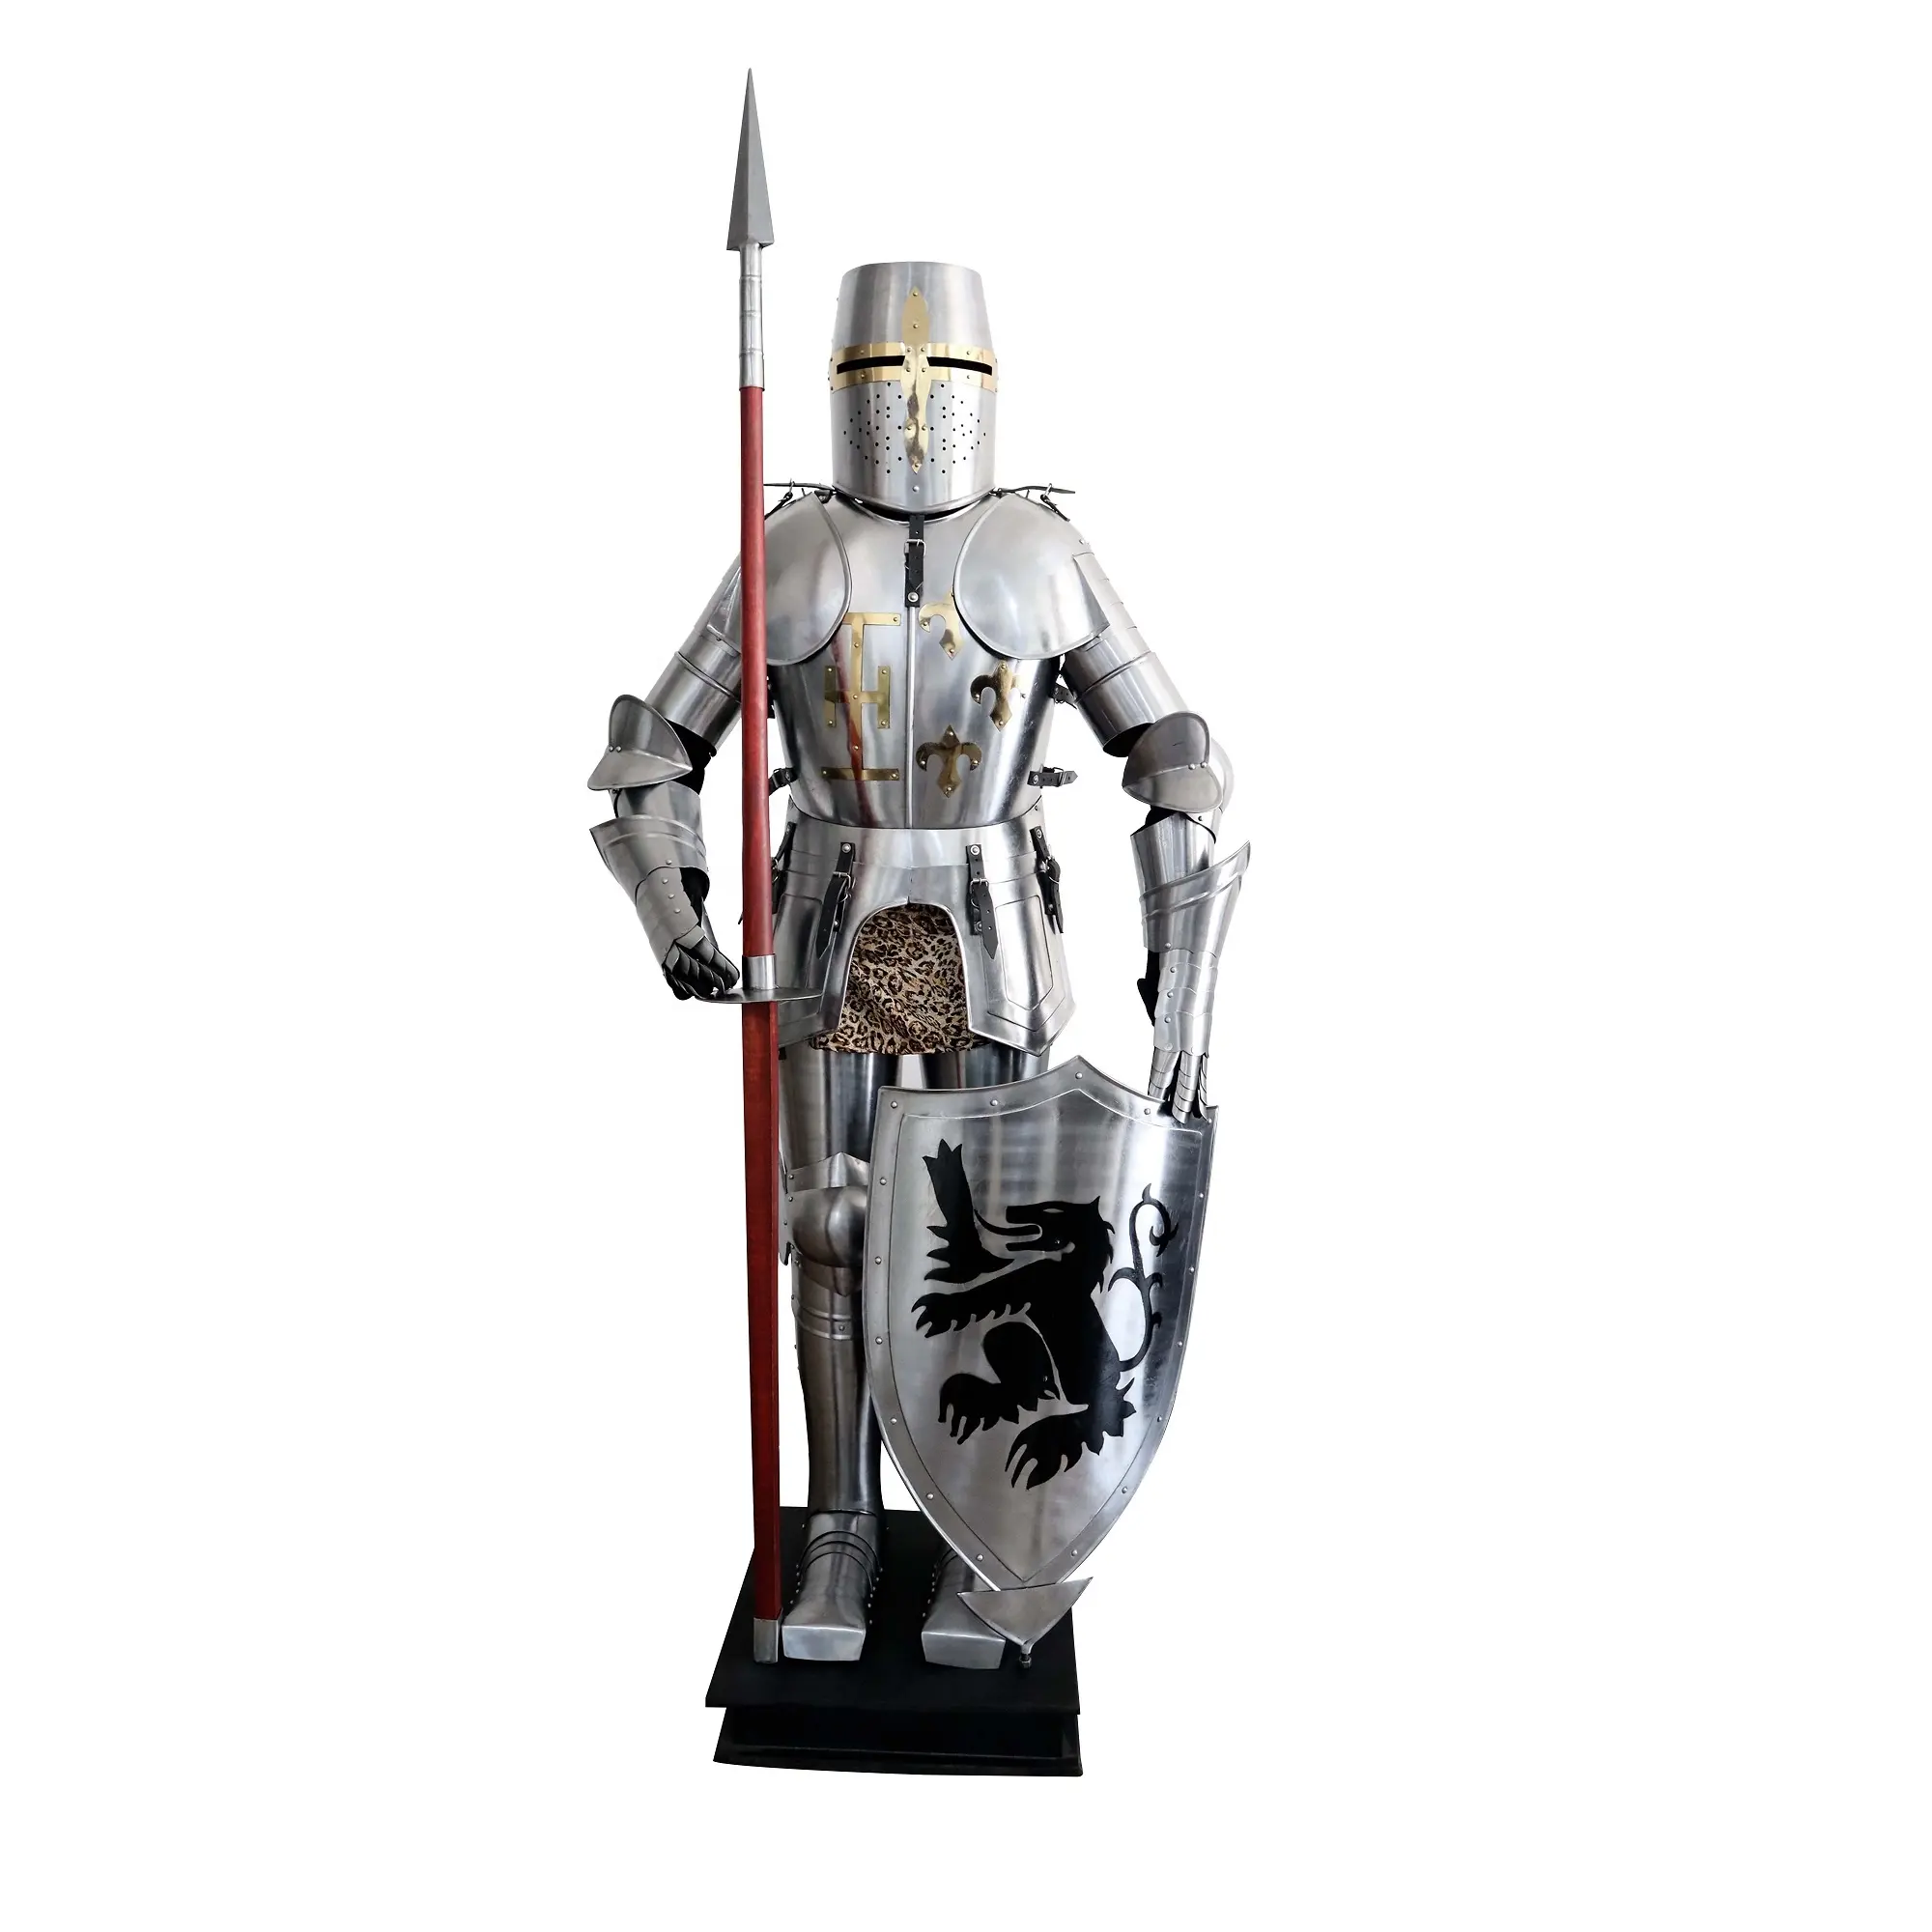 Ksatria Medieval Setelan Templar Baju Besi Dapat Dipakai Kostum Pertempuran Prajurit Crusader Setelan Prajurit Crusader Setelan Baju Besi untuk Hadiah